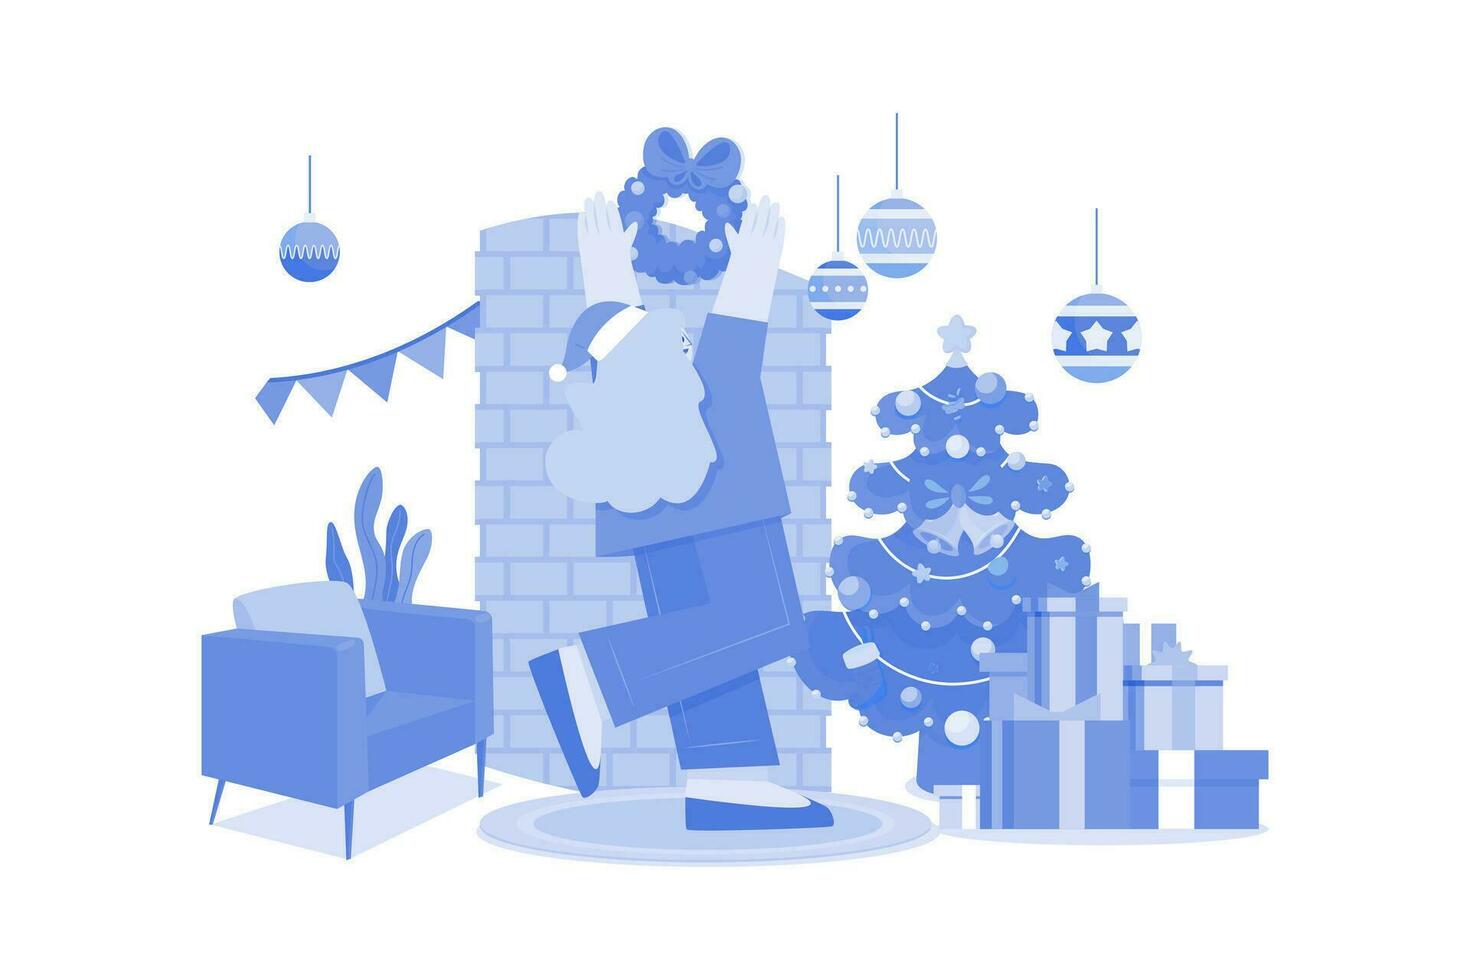 Navidad decoración a hogar ilustración concepto en blanco antecedentes vector